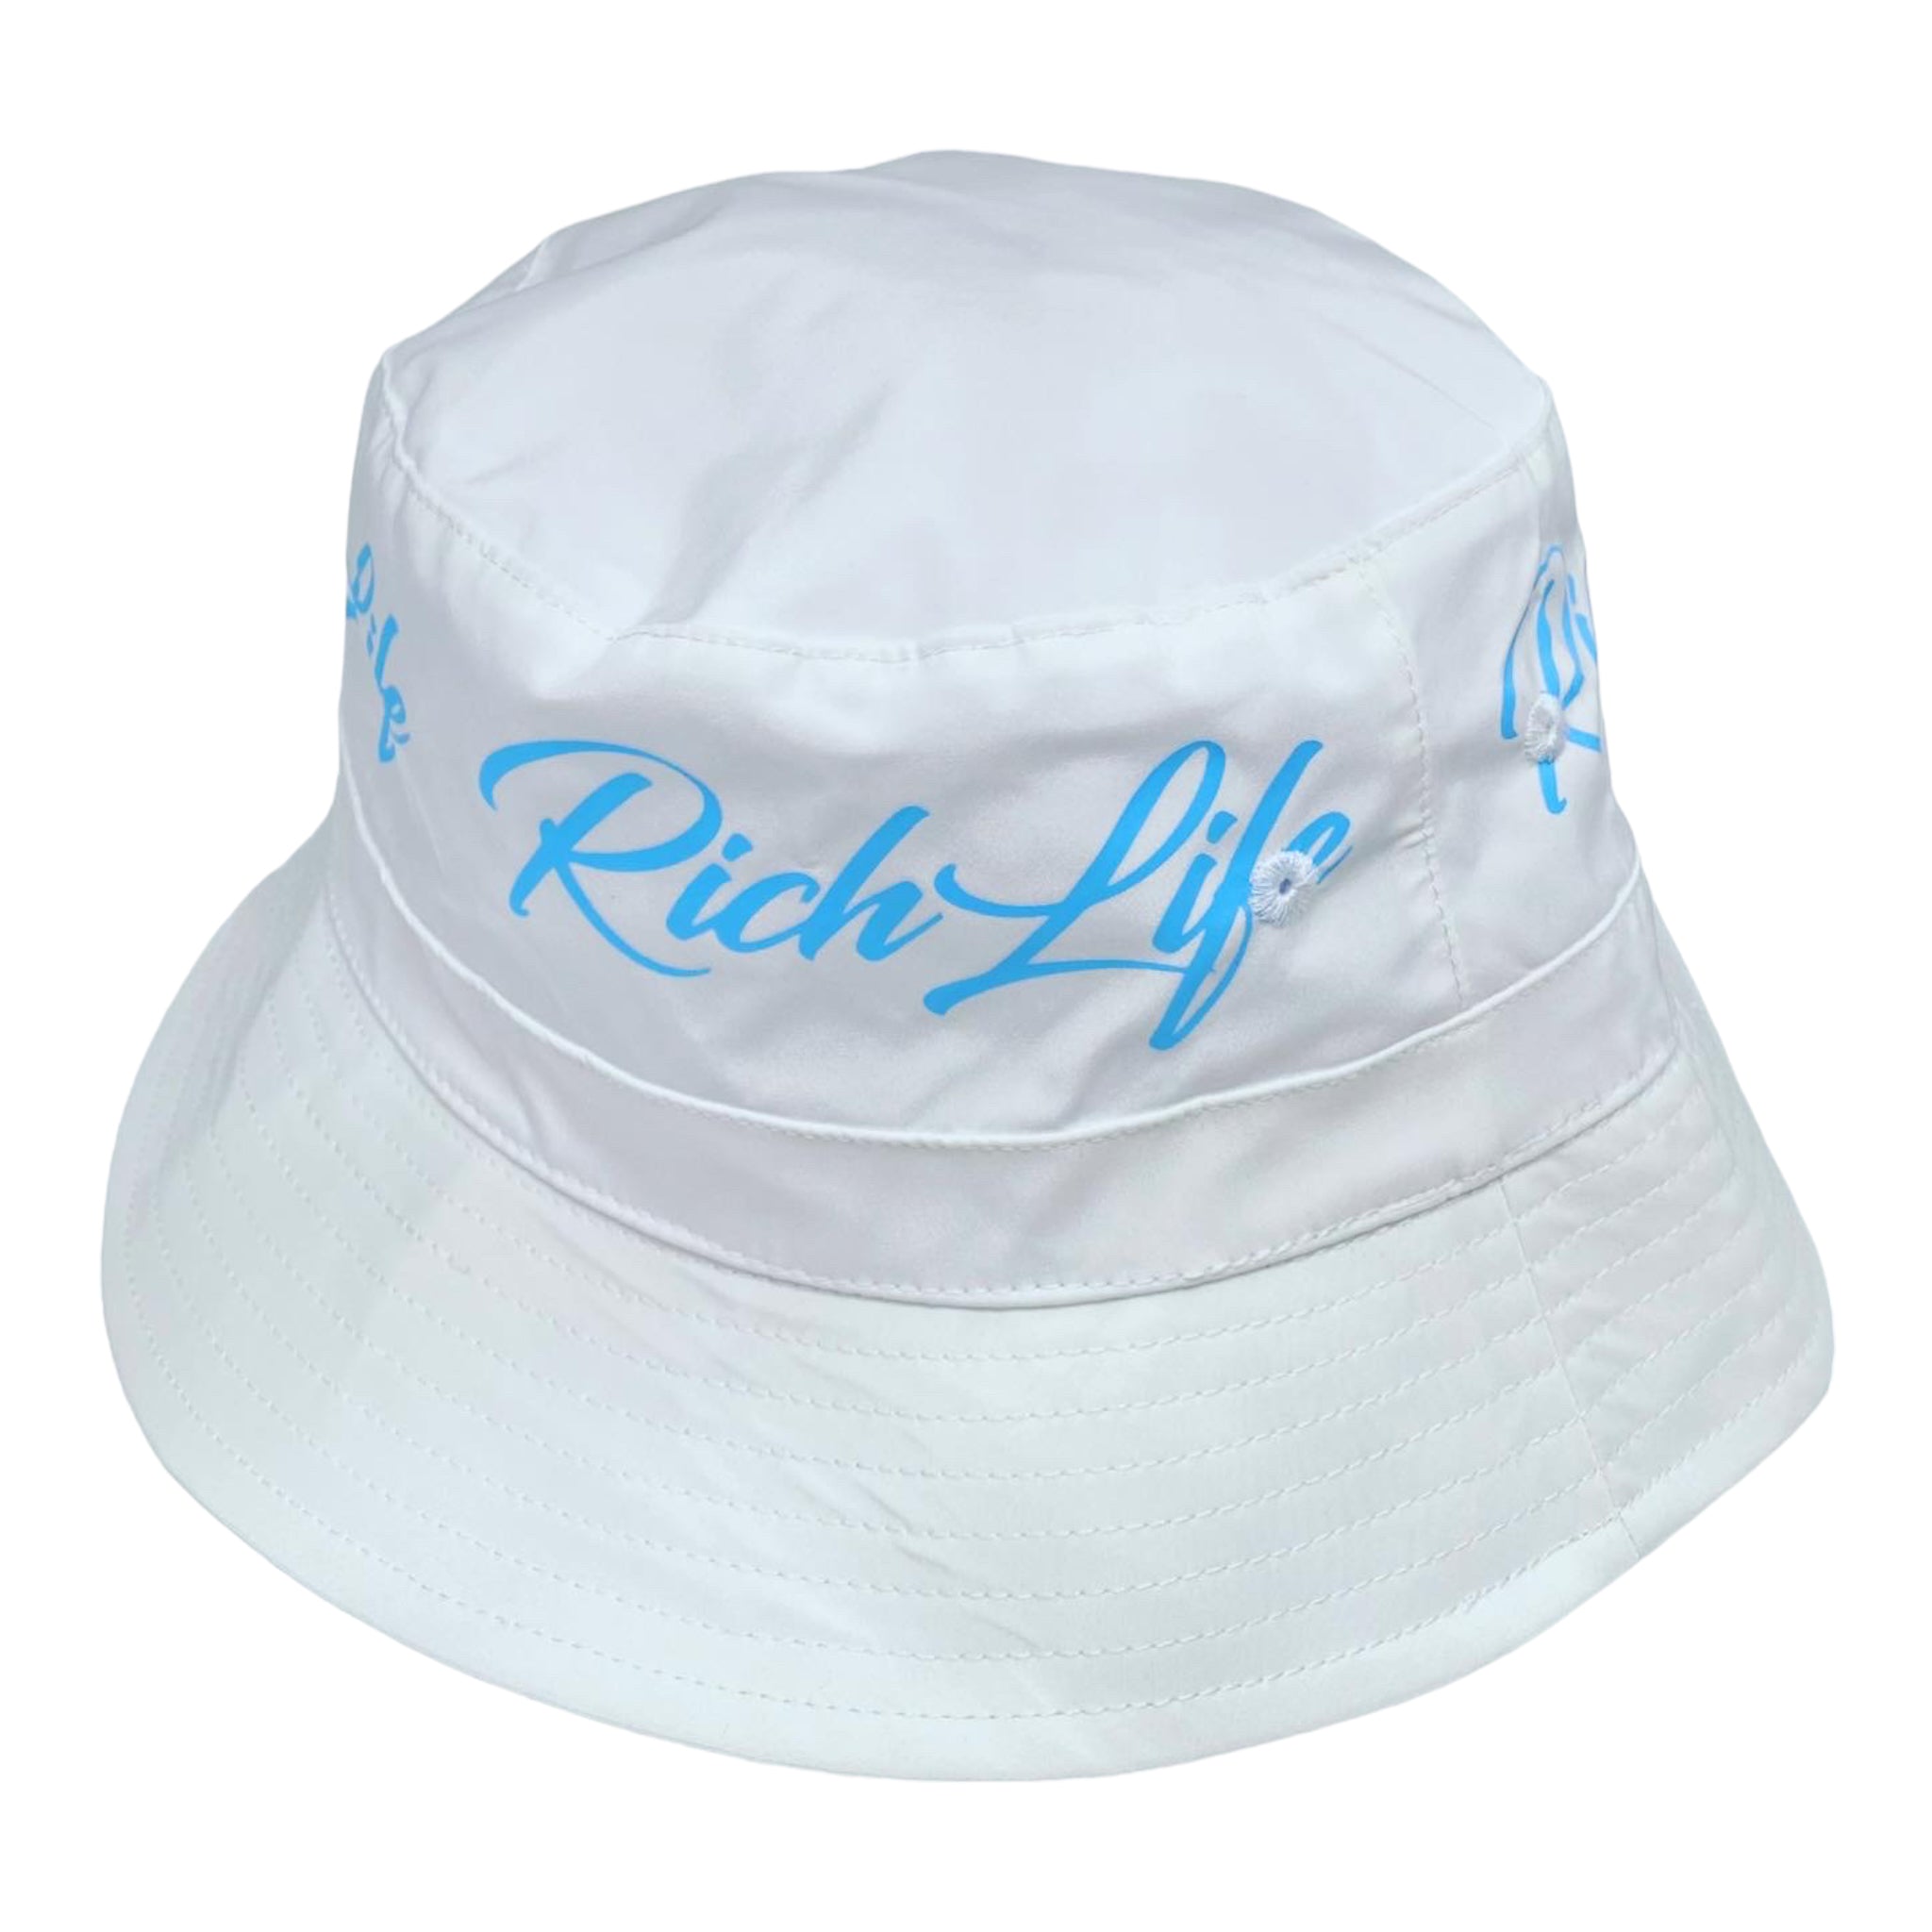 Rich Life "Bucket" Hat